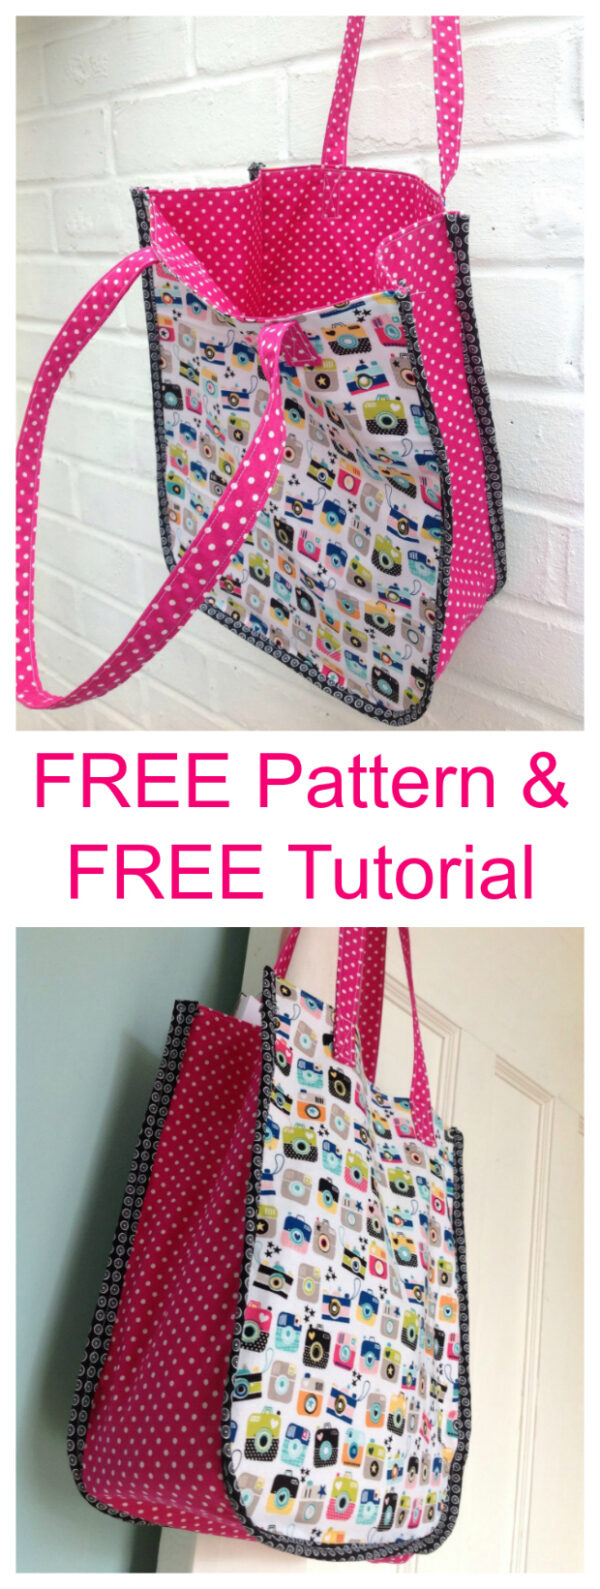 Instamatic Tote Bag FREE sewing pattern & tutorial - Sew Modern Bags